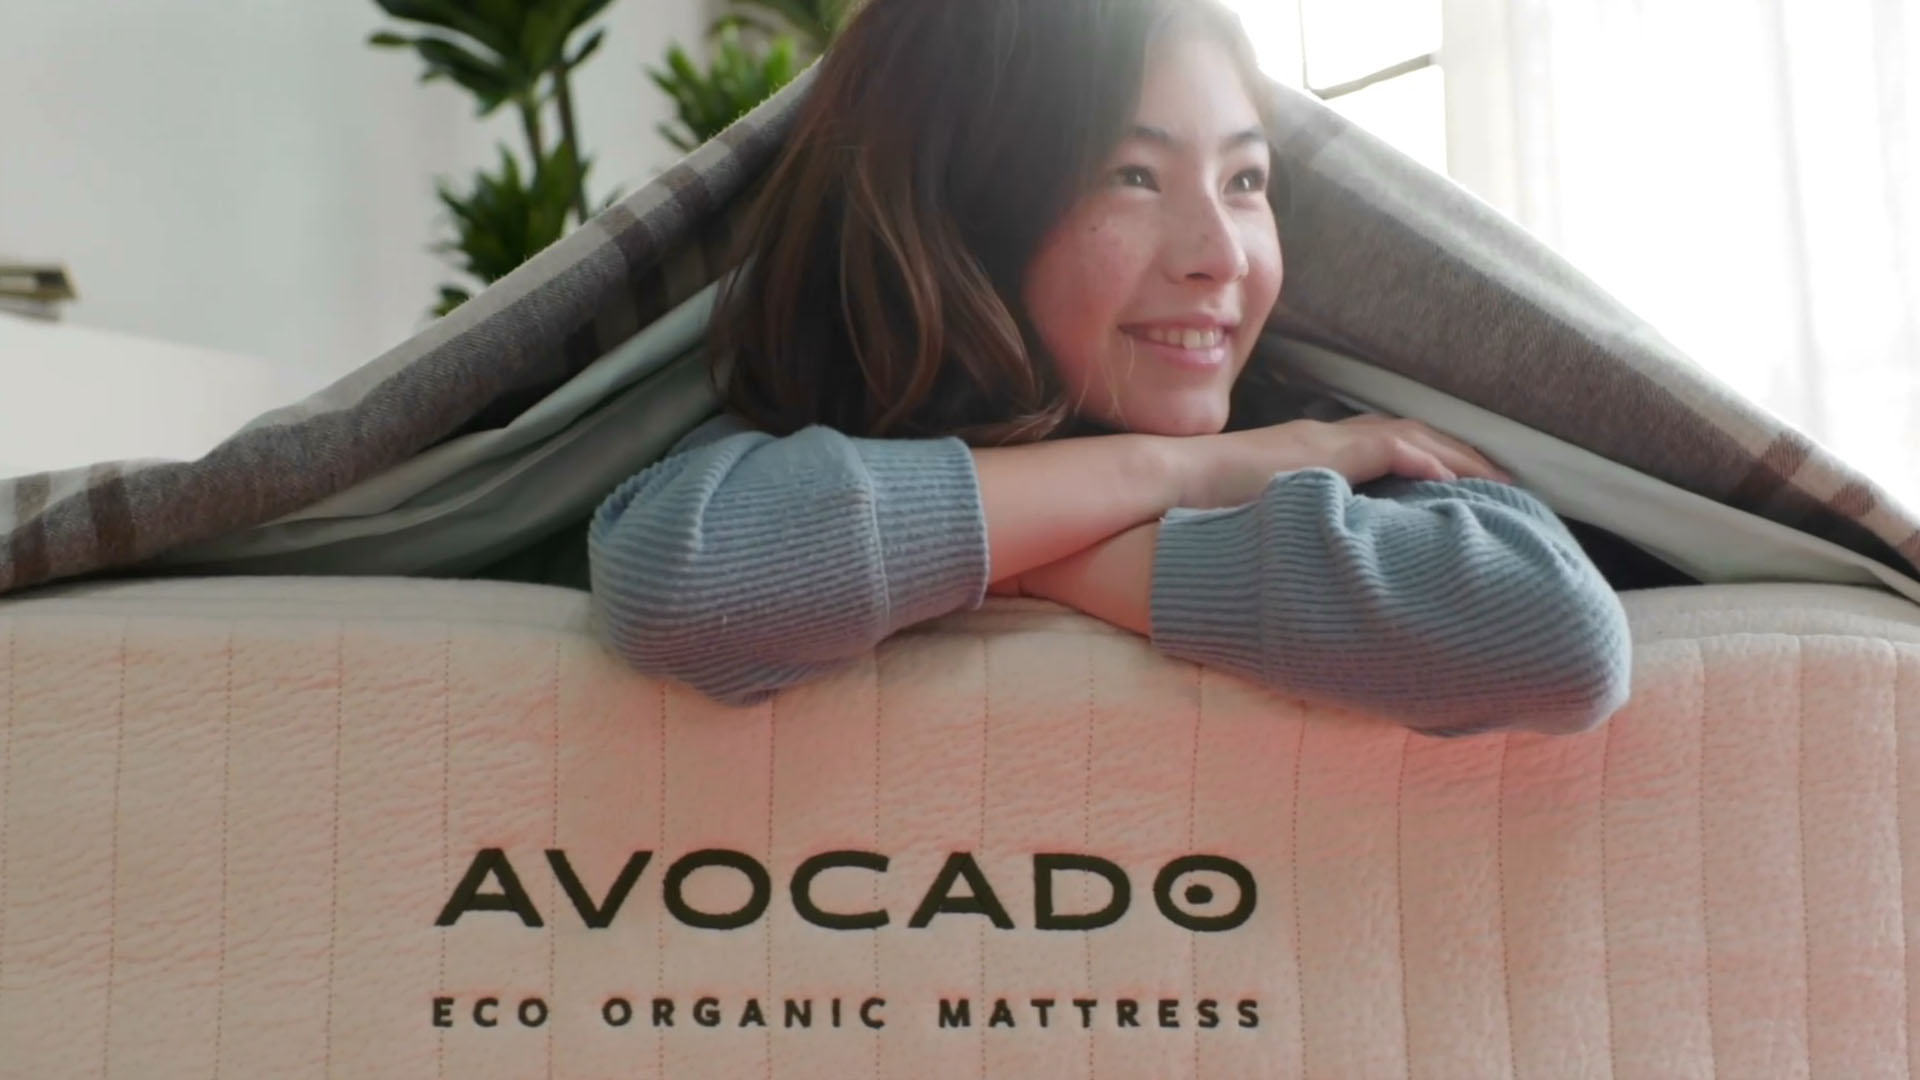 Who sells Avocado mattress near me in Bowie